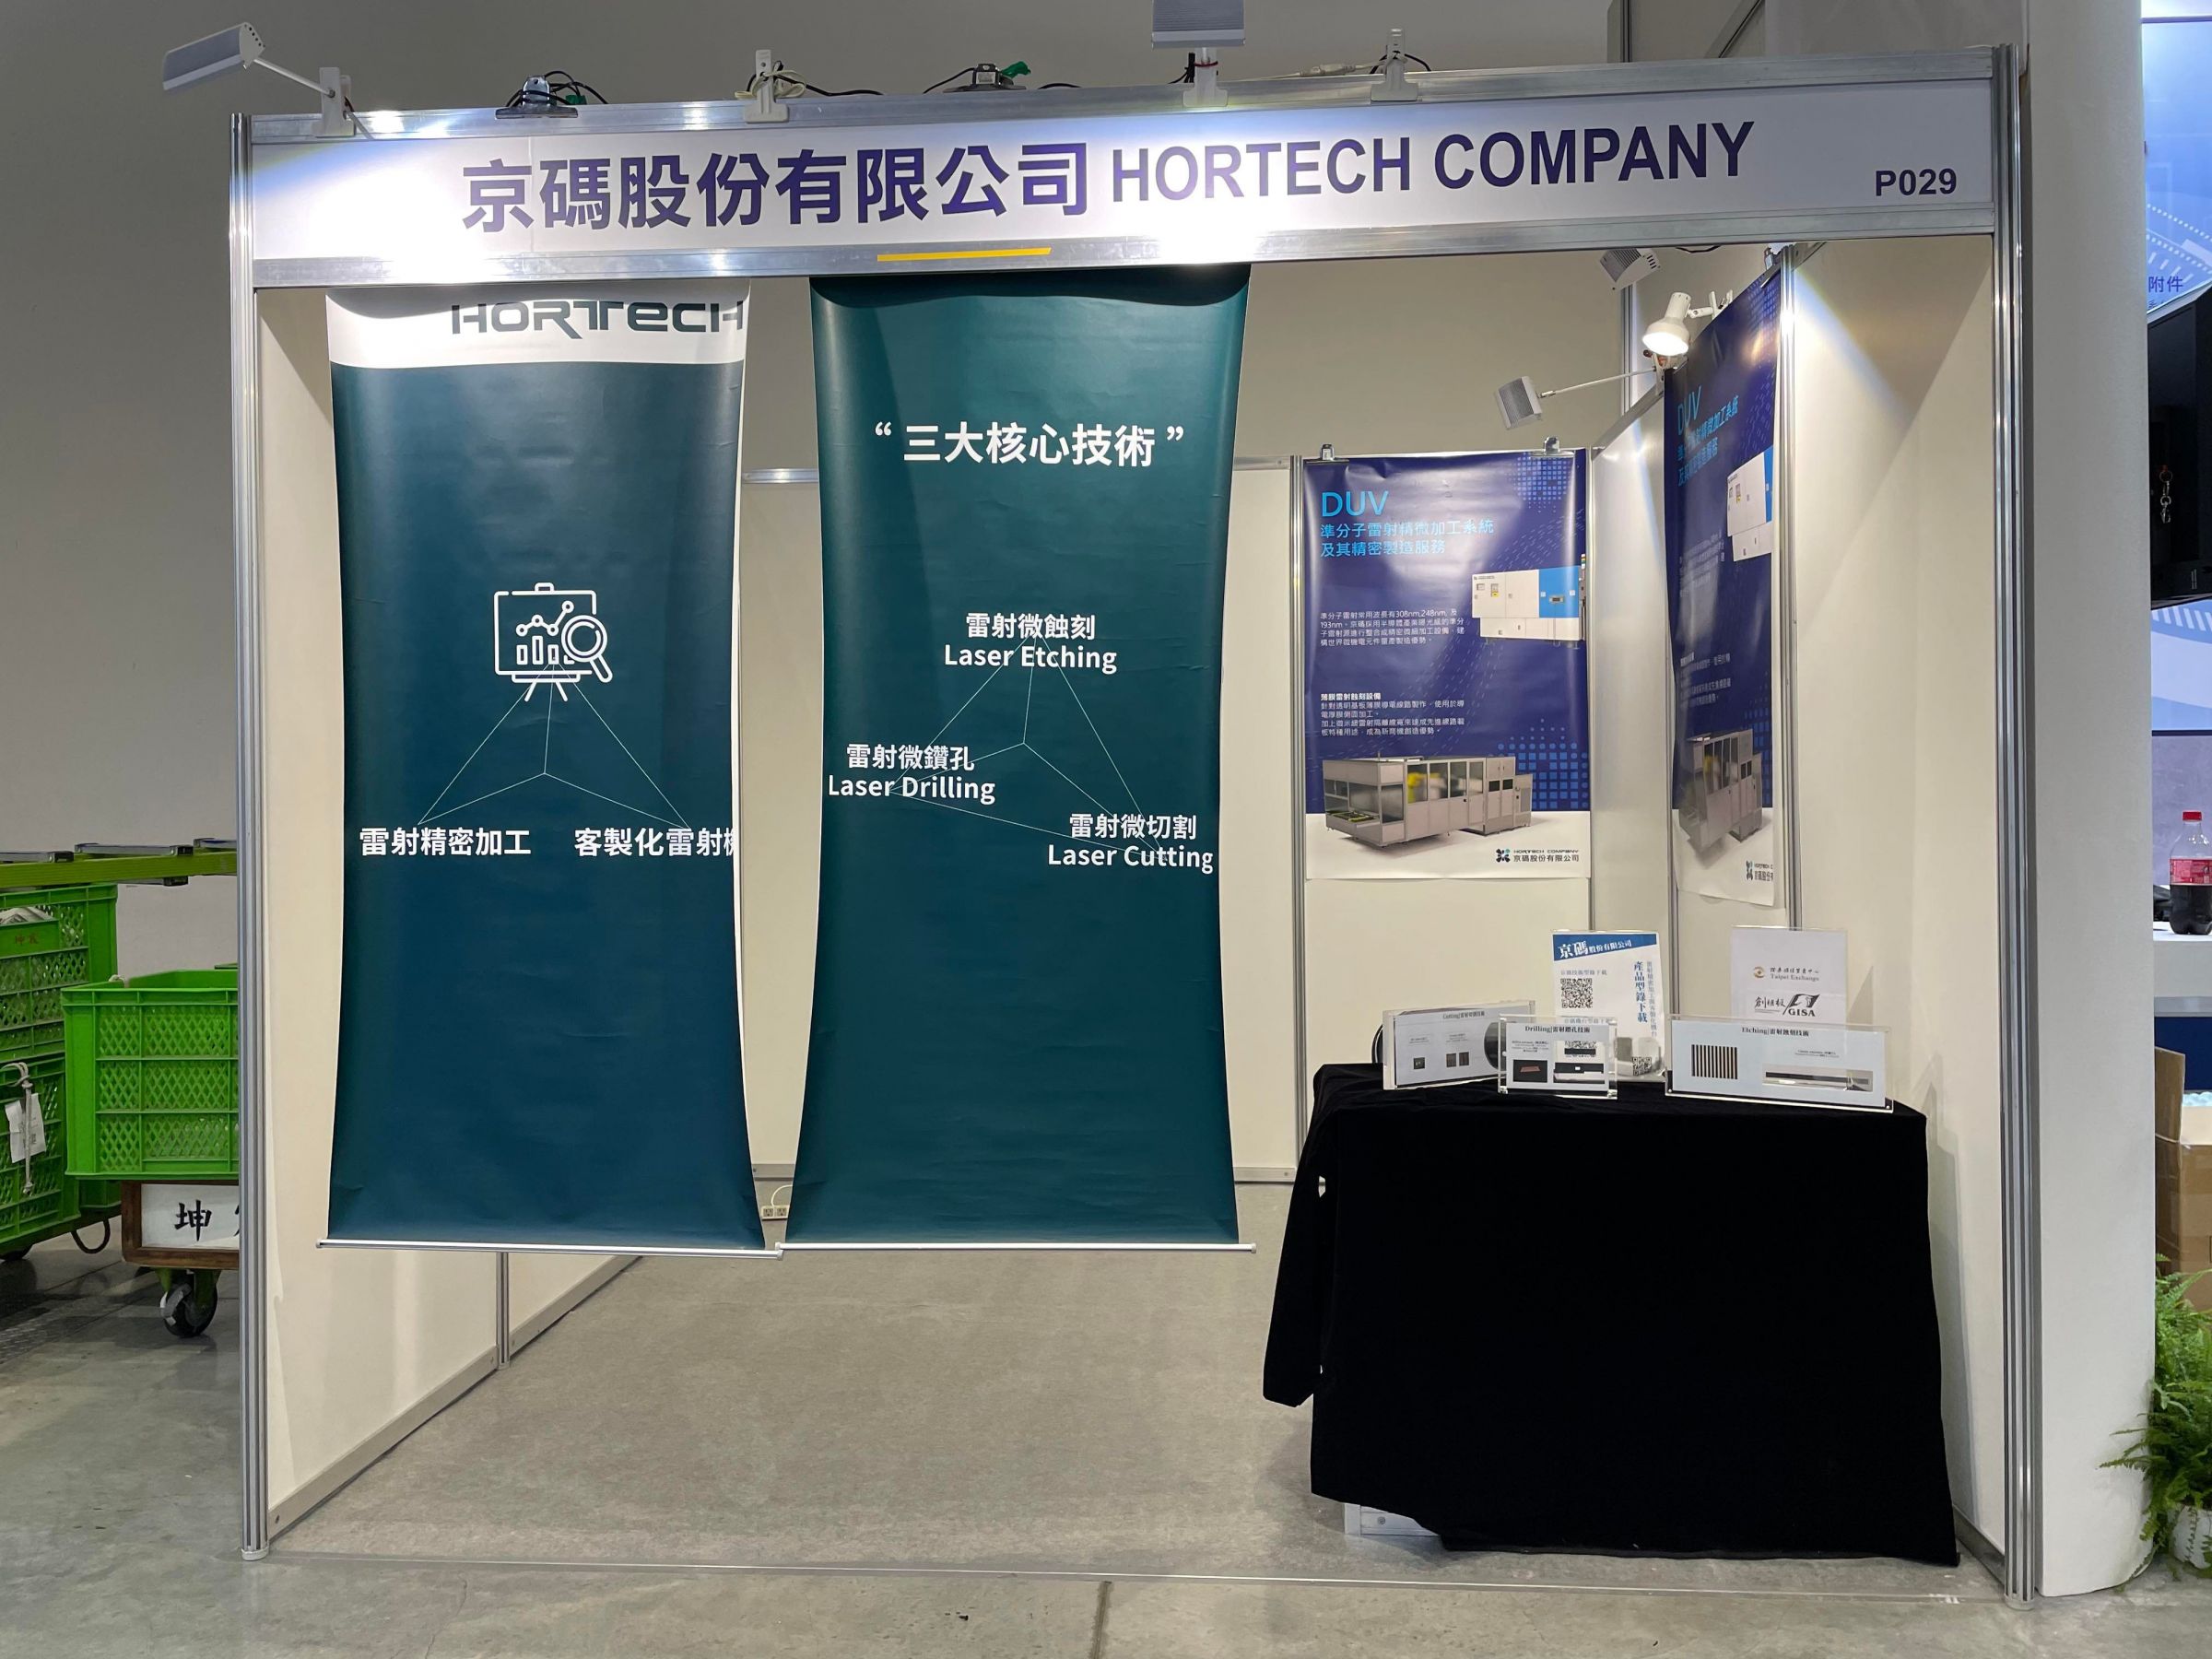 Hortech Company's booth at 2022 Laser & Photonics Taiwan